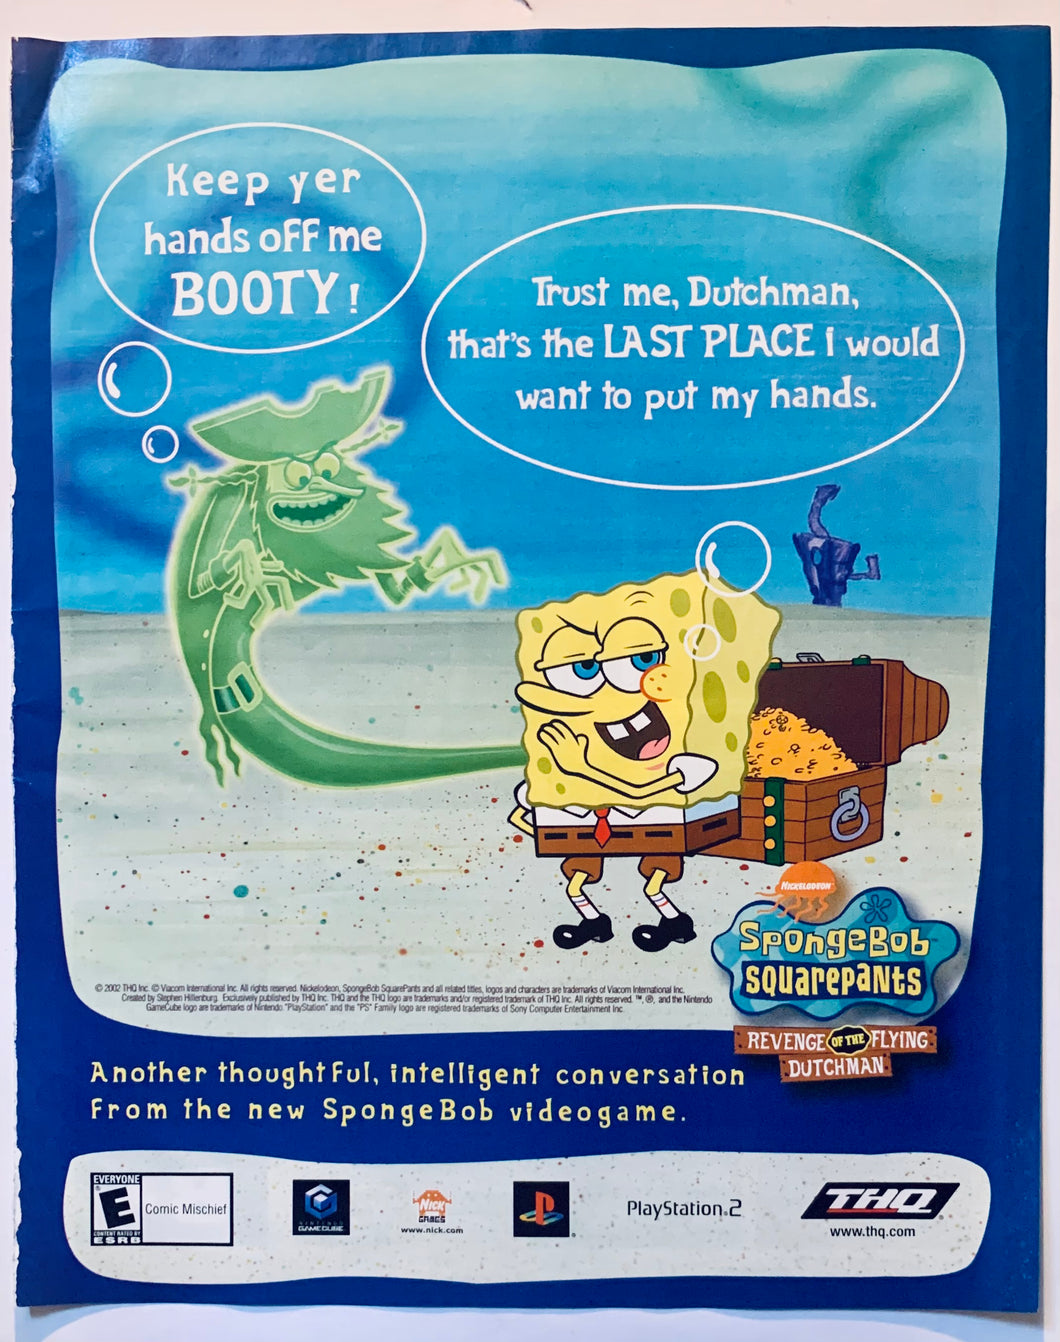 SpongeBob Squarepants: Revenge of the Flying Dutchman - PS2 NGC - Original Vintage Advertisement - Print Ads - Laminated A4 Poster